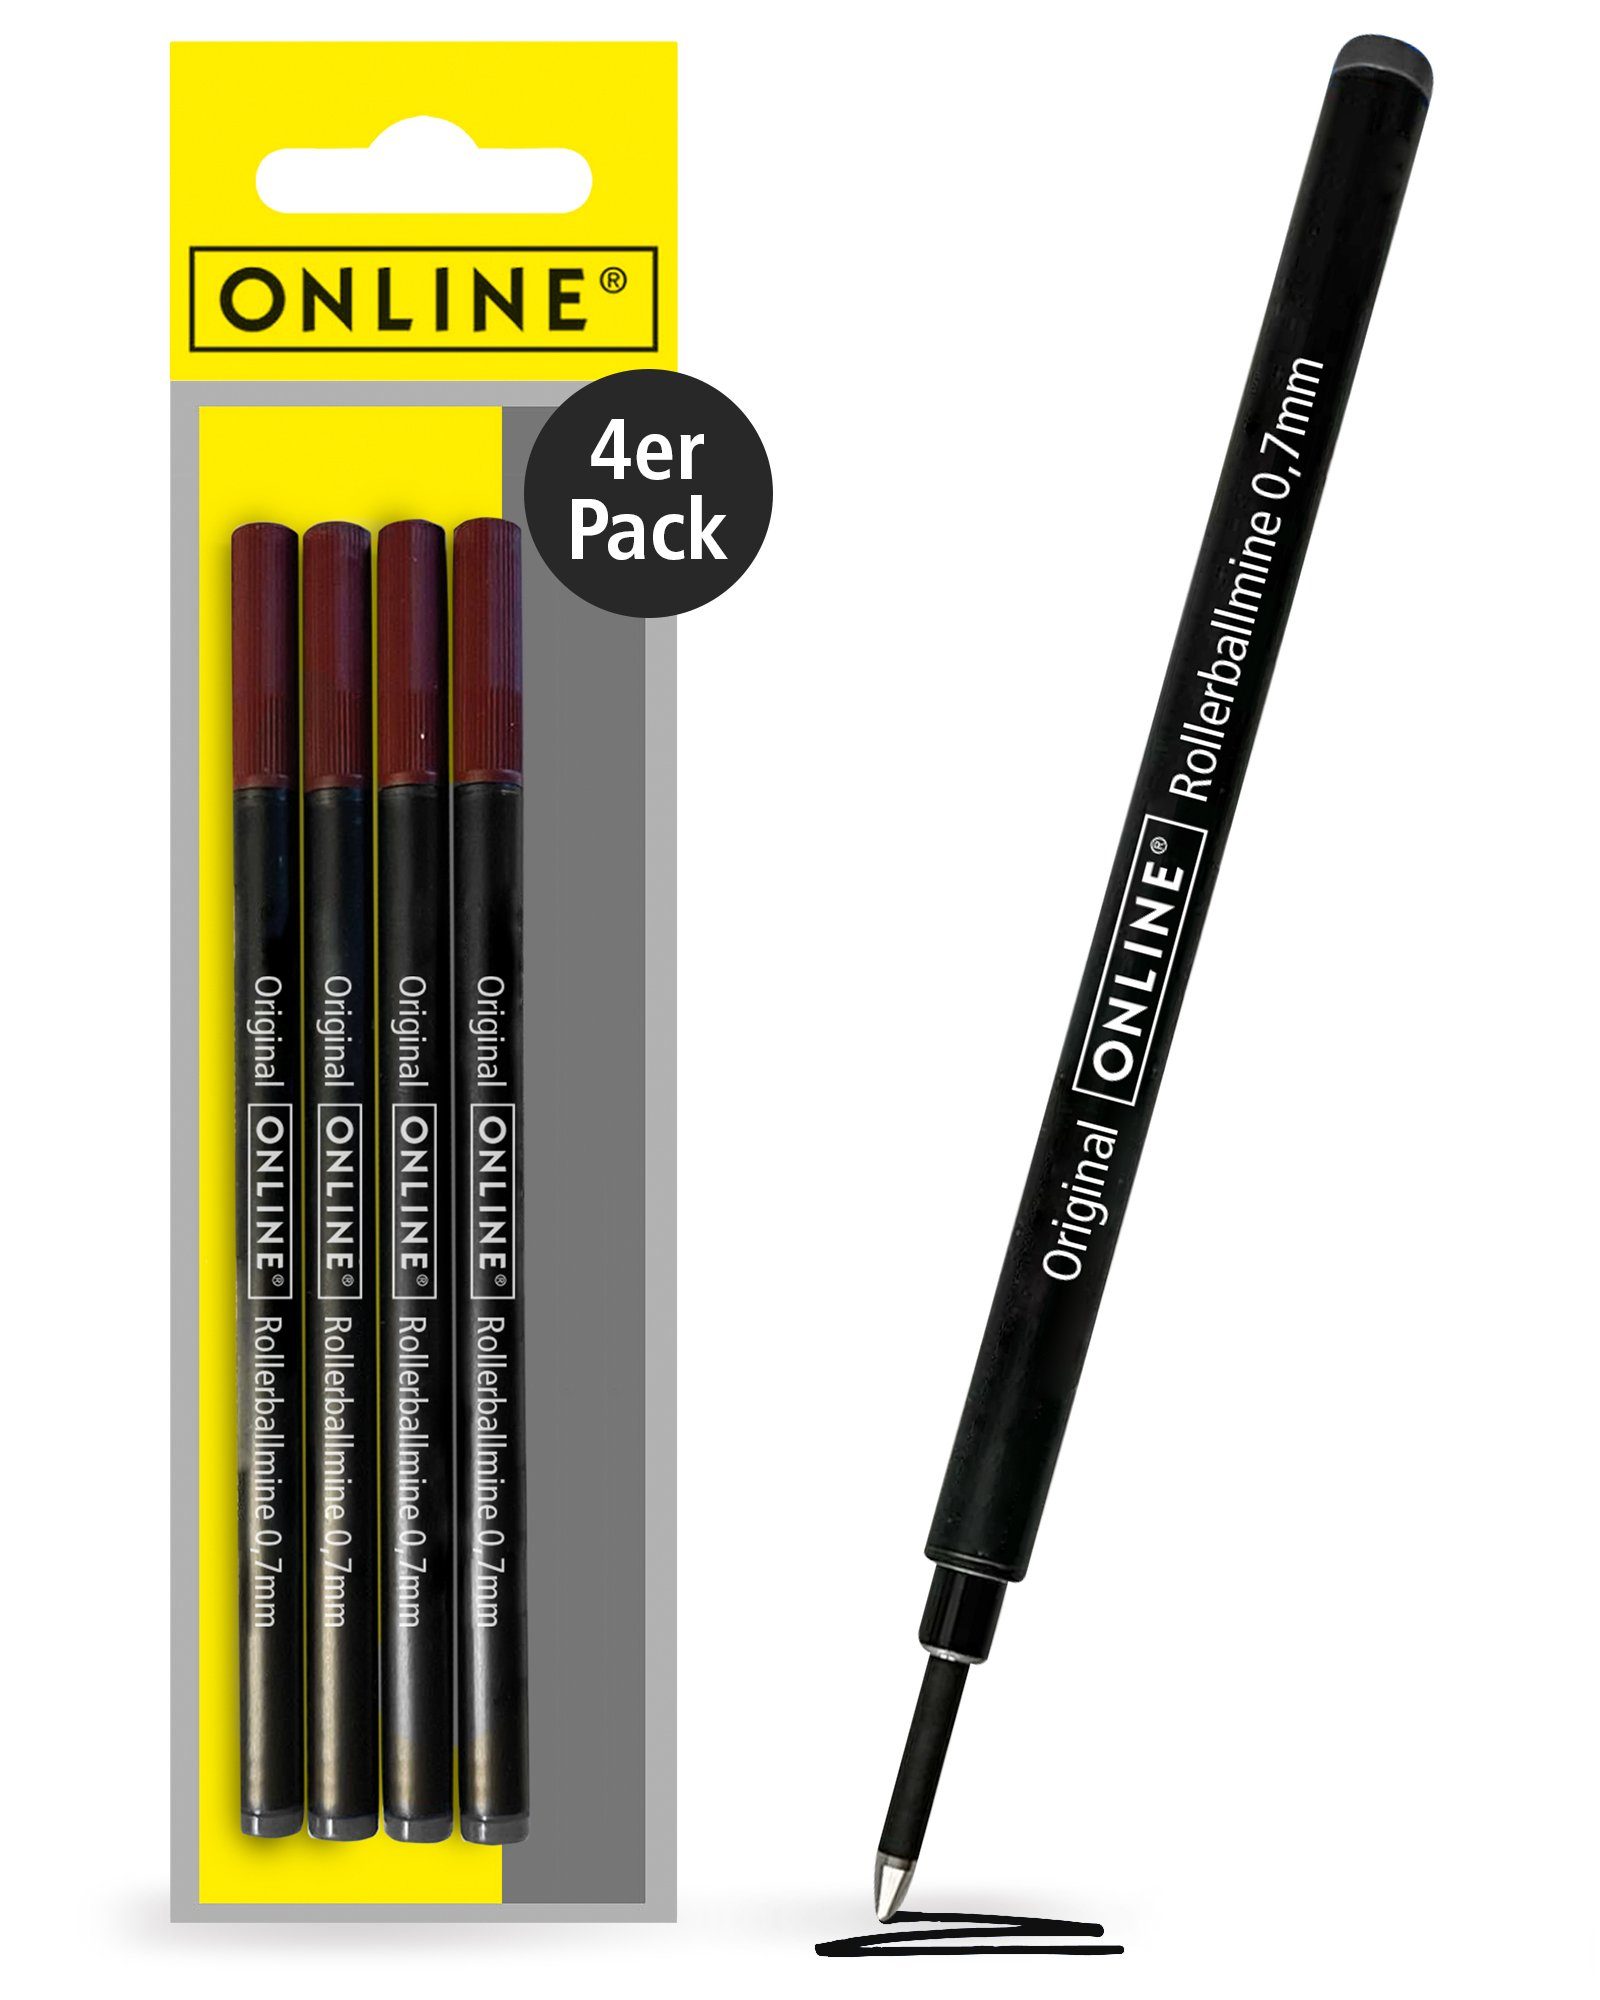 Online Pen Tintenroller Rollerball Mine, kompatibel mit Tintenrollern verschiedener Marken